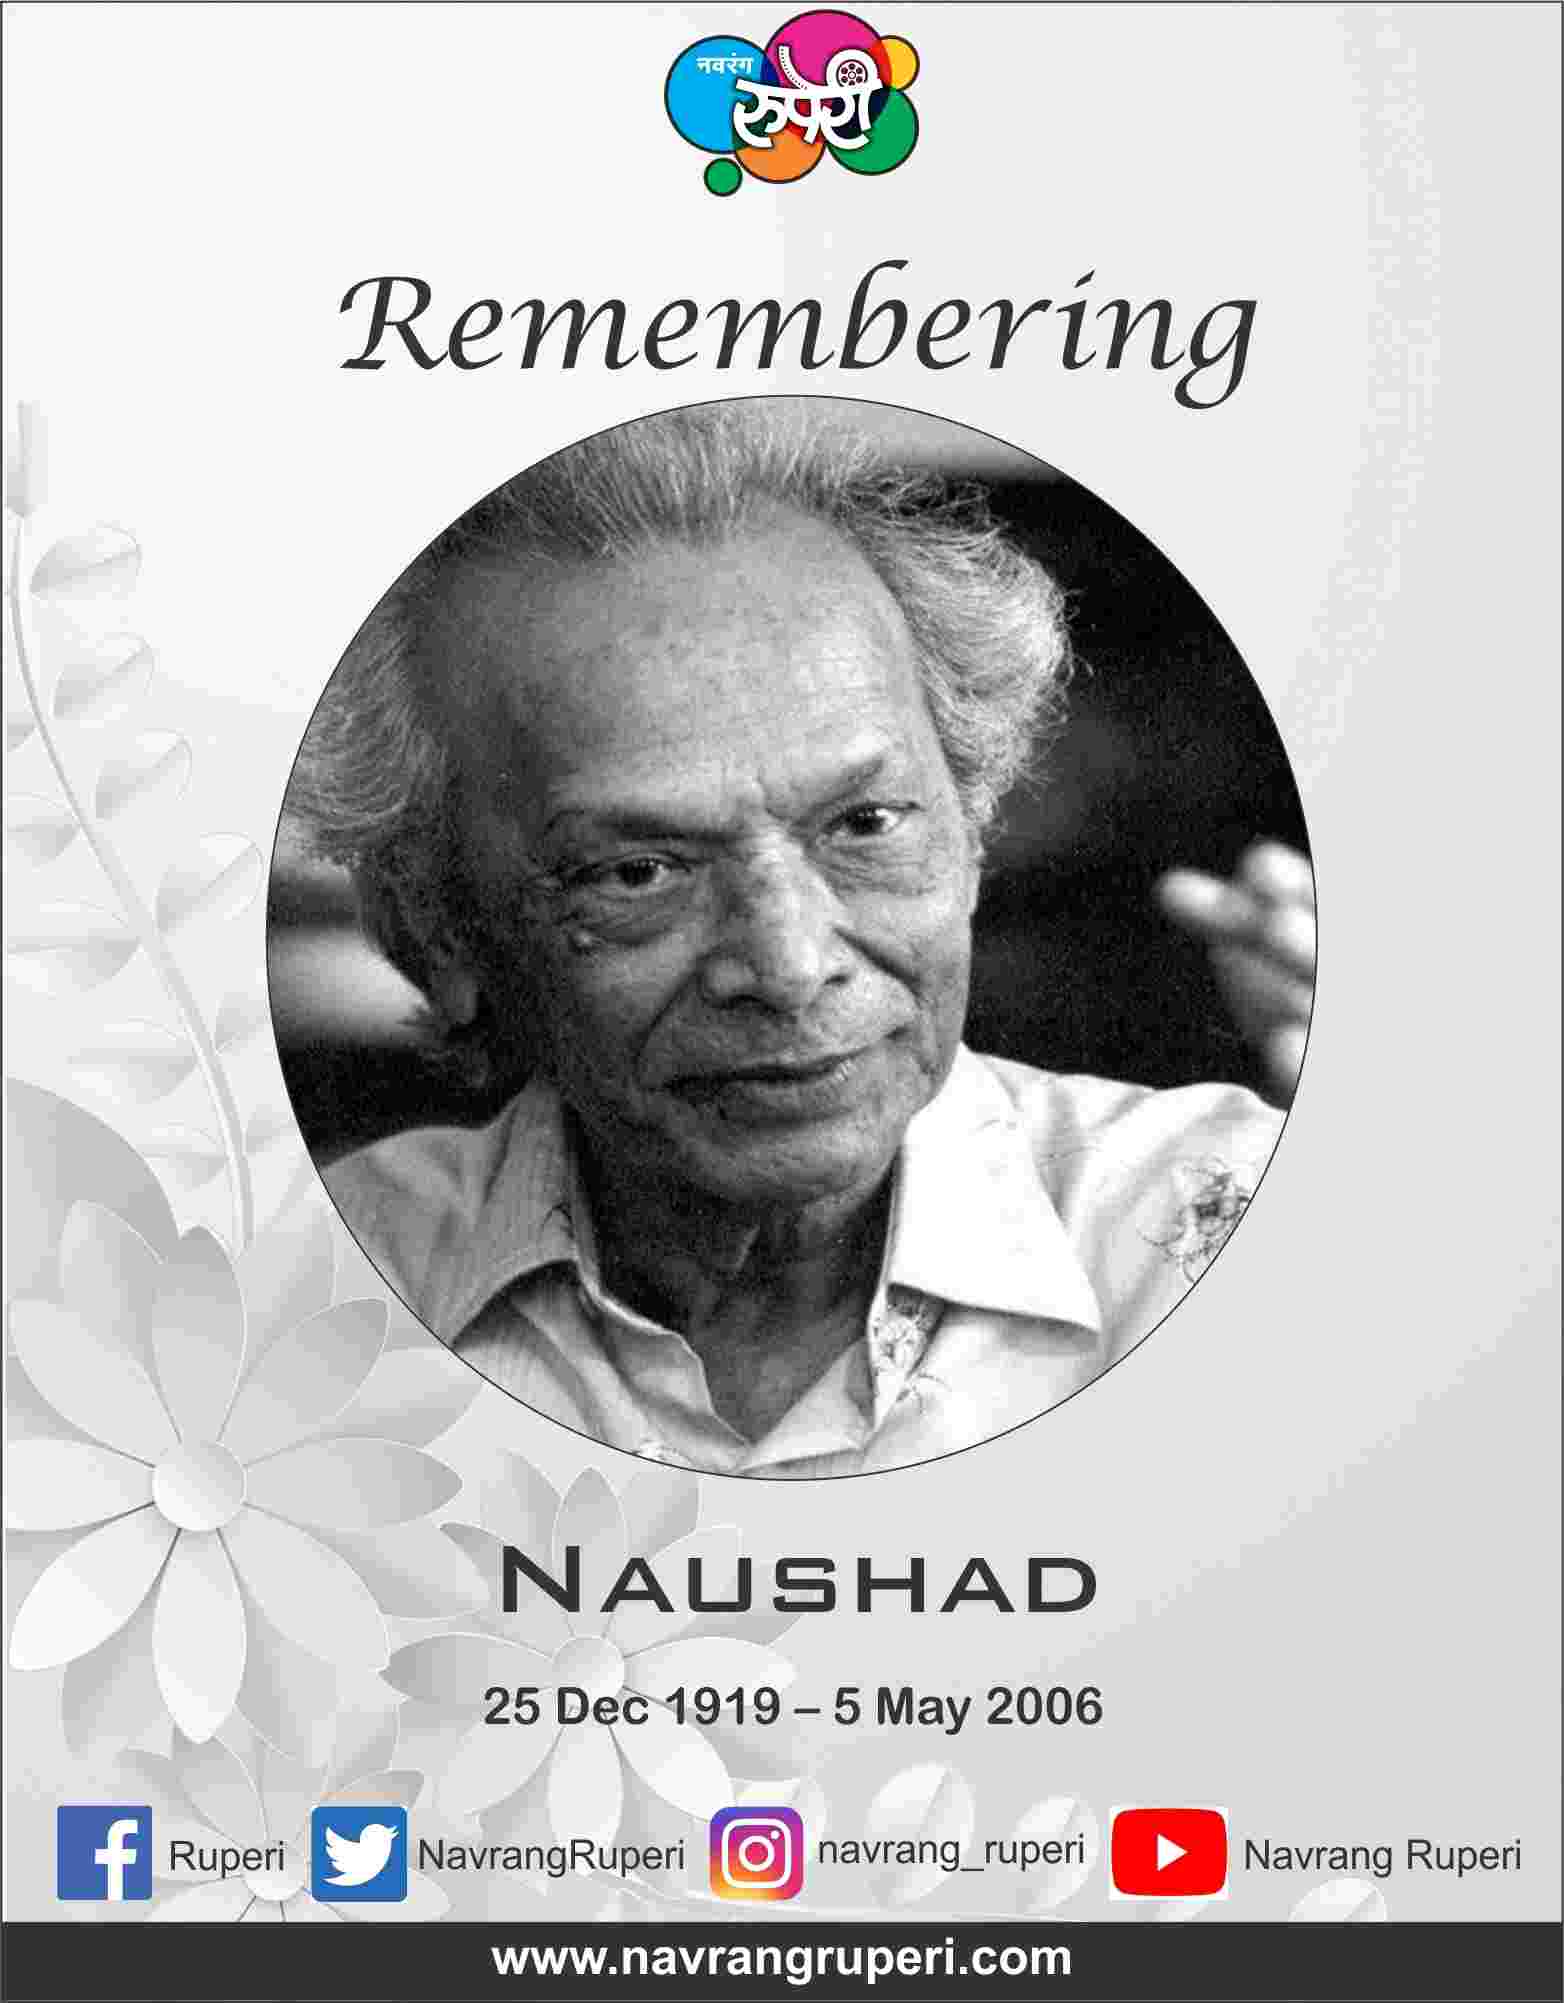 Remembering the Legendary Music Director Naushad